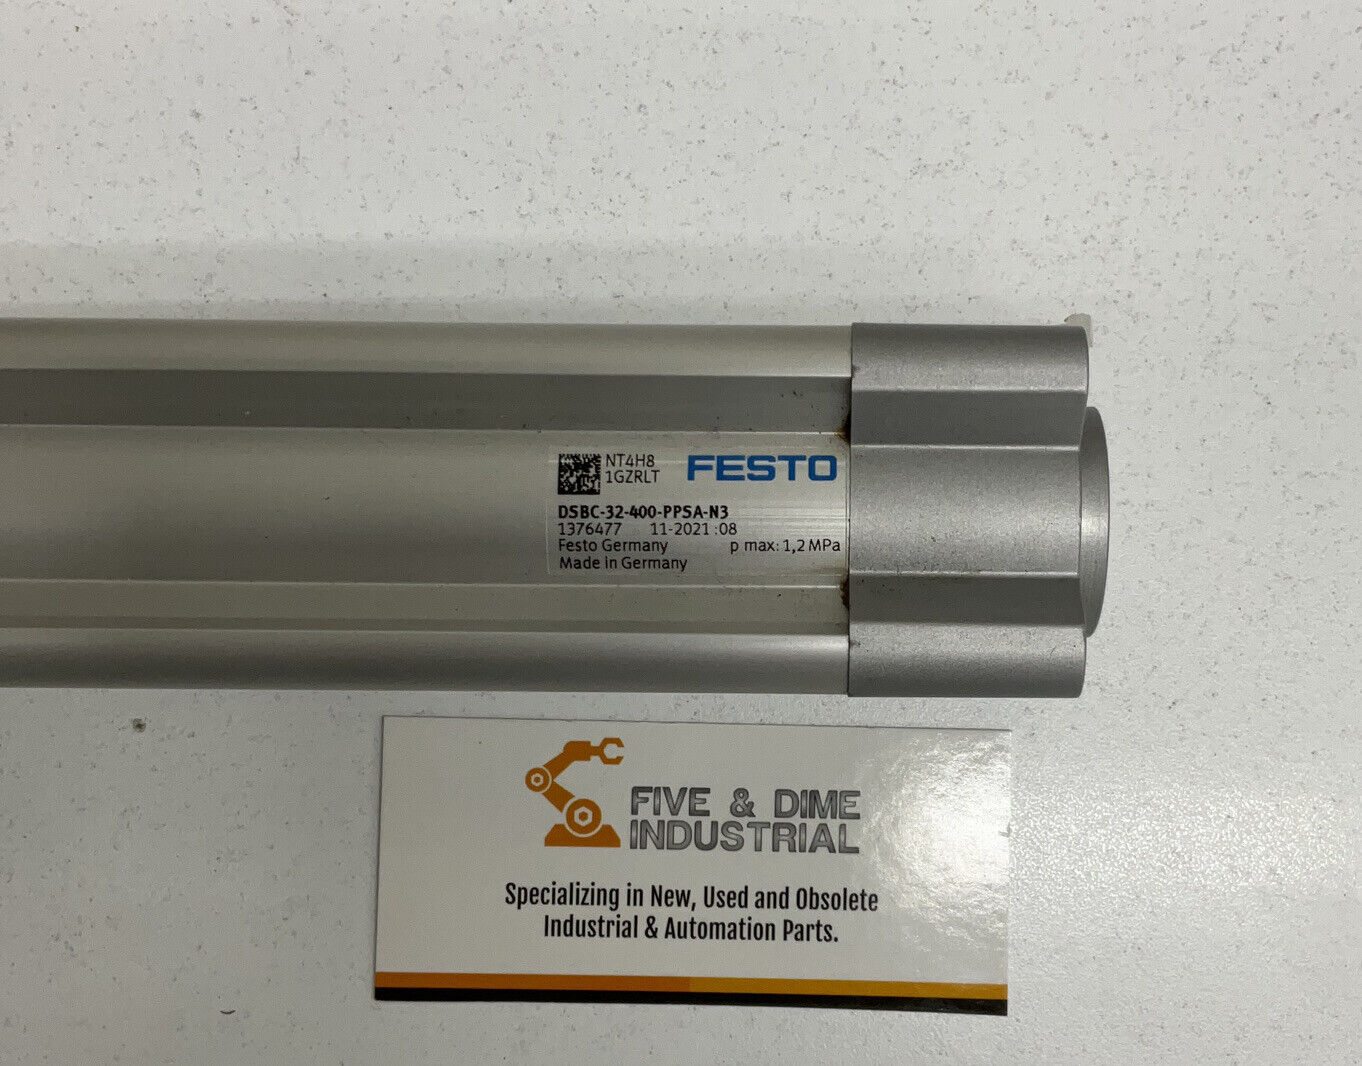 Festo DSBC-32-400-PPSA-N3 Pneumatic Cylinder 32mm Bore 400mm Stroke (OV104) - 0